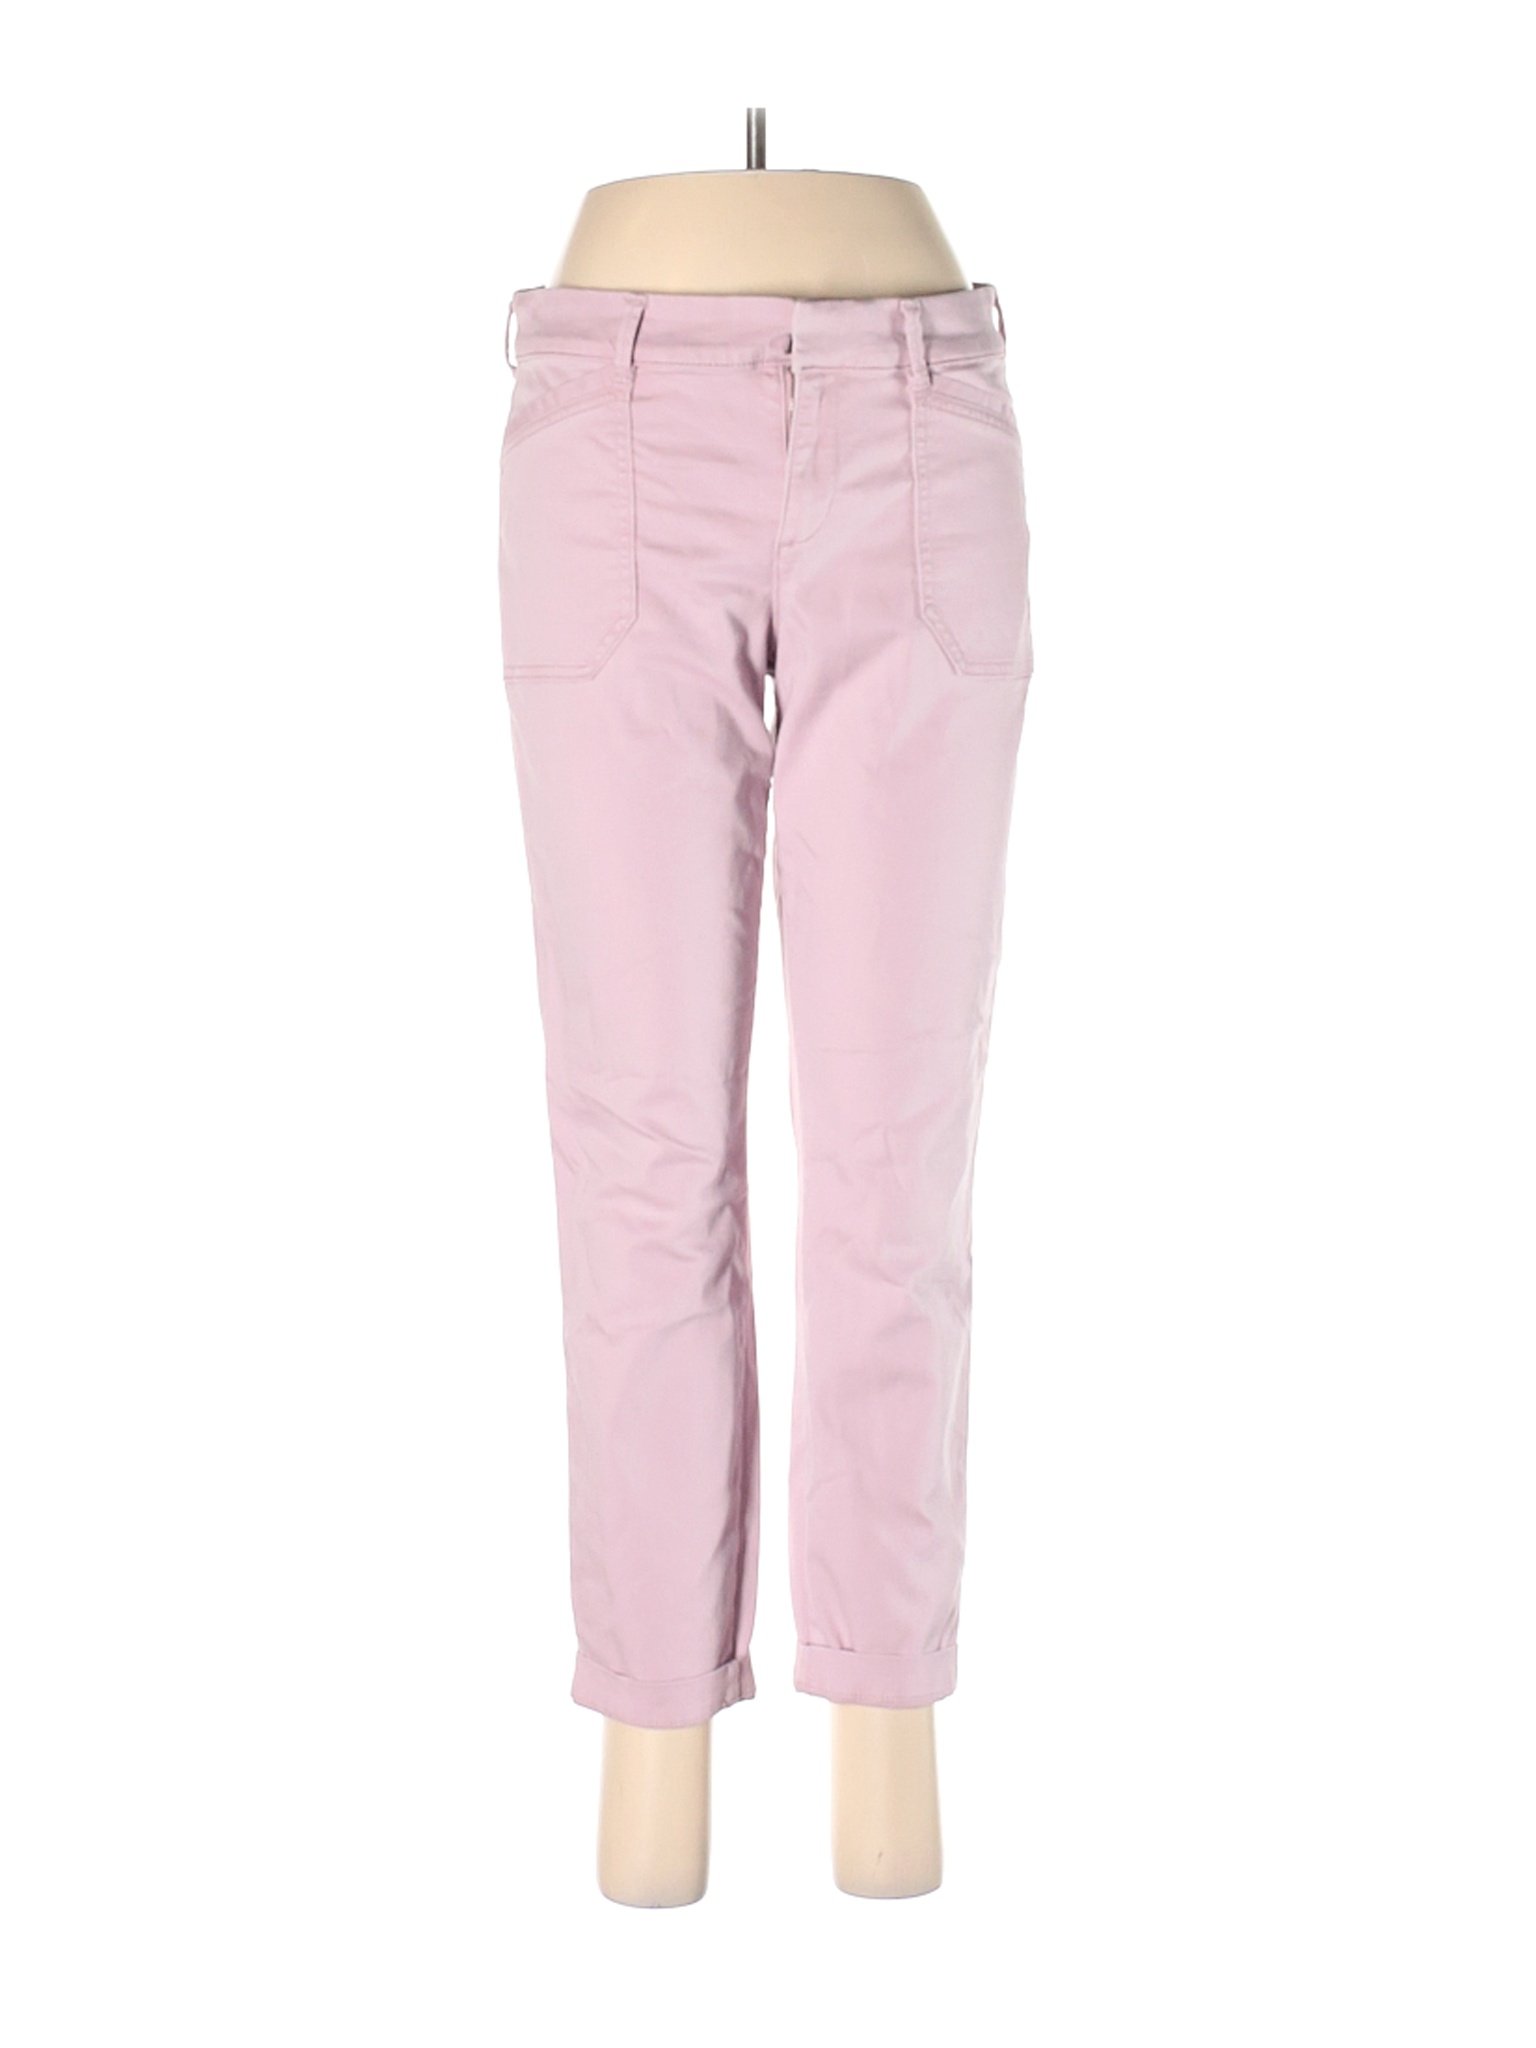 Old Navy Women Pink Jeans 6 | eBay